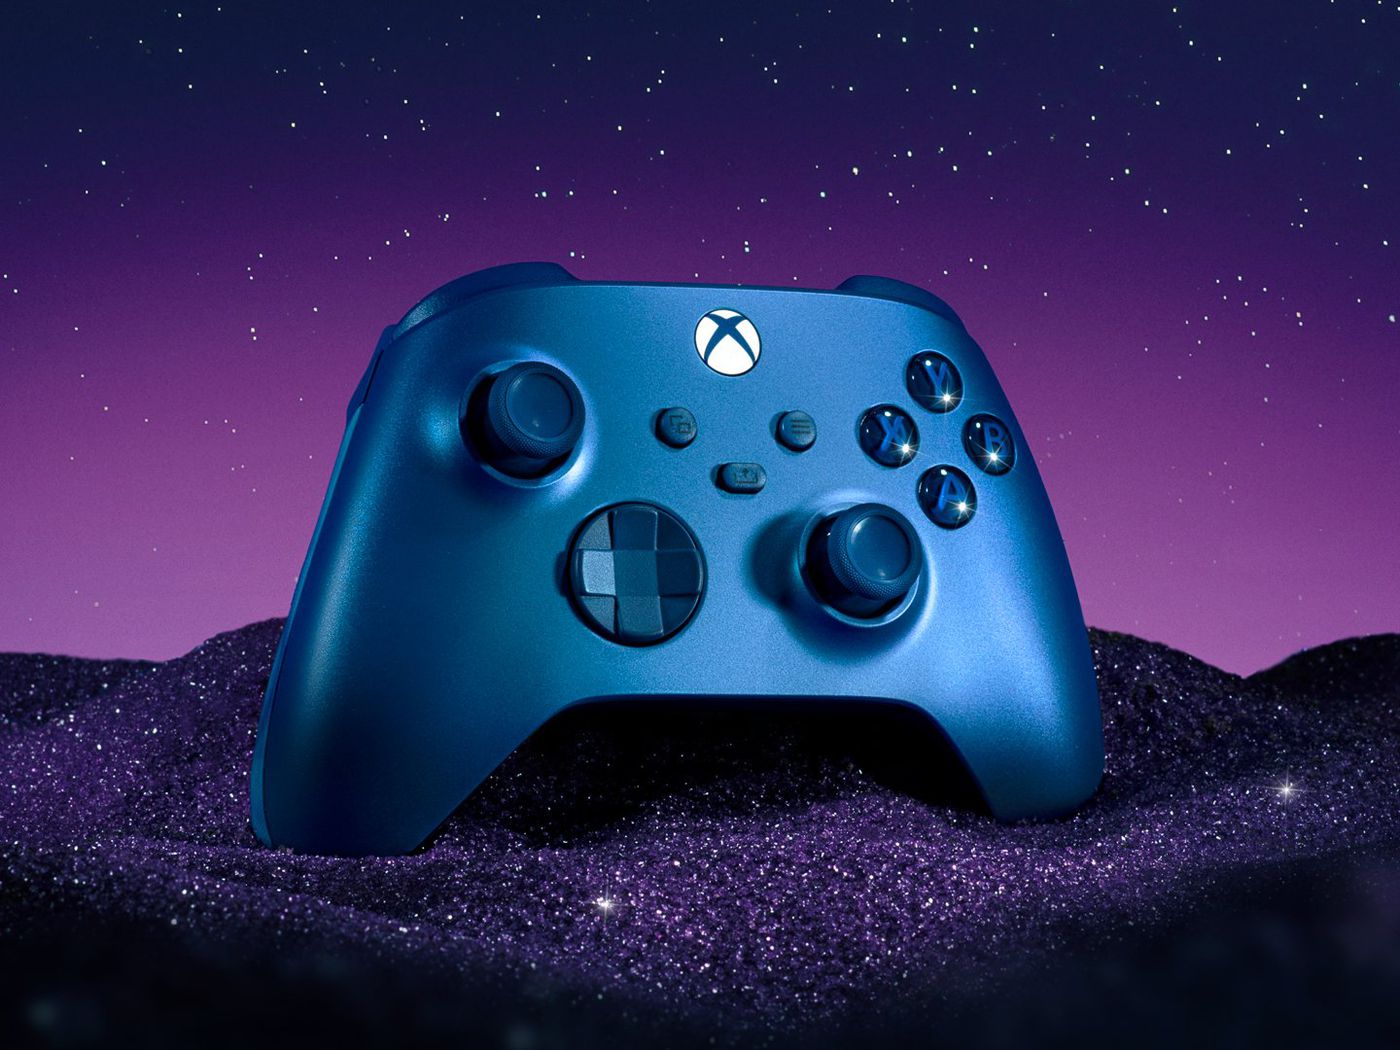 Microsoft's new Aqua Shift Special Edition Xbox controller is a dazzling blue